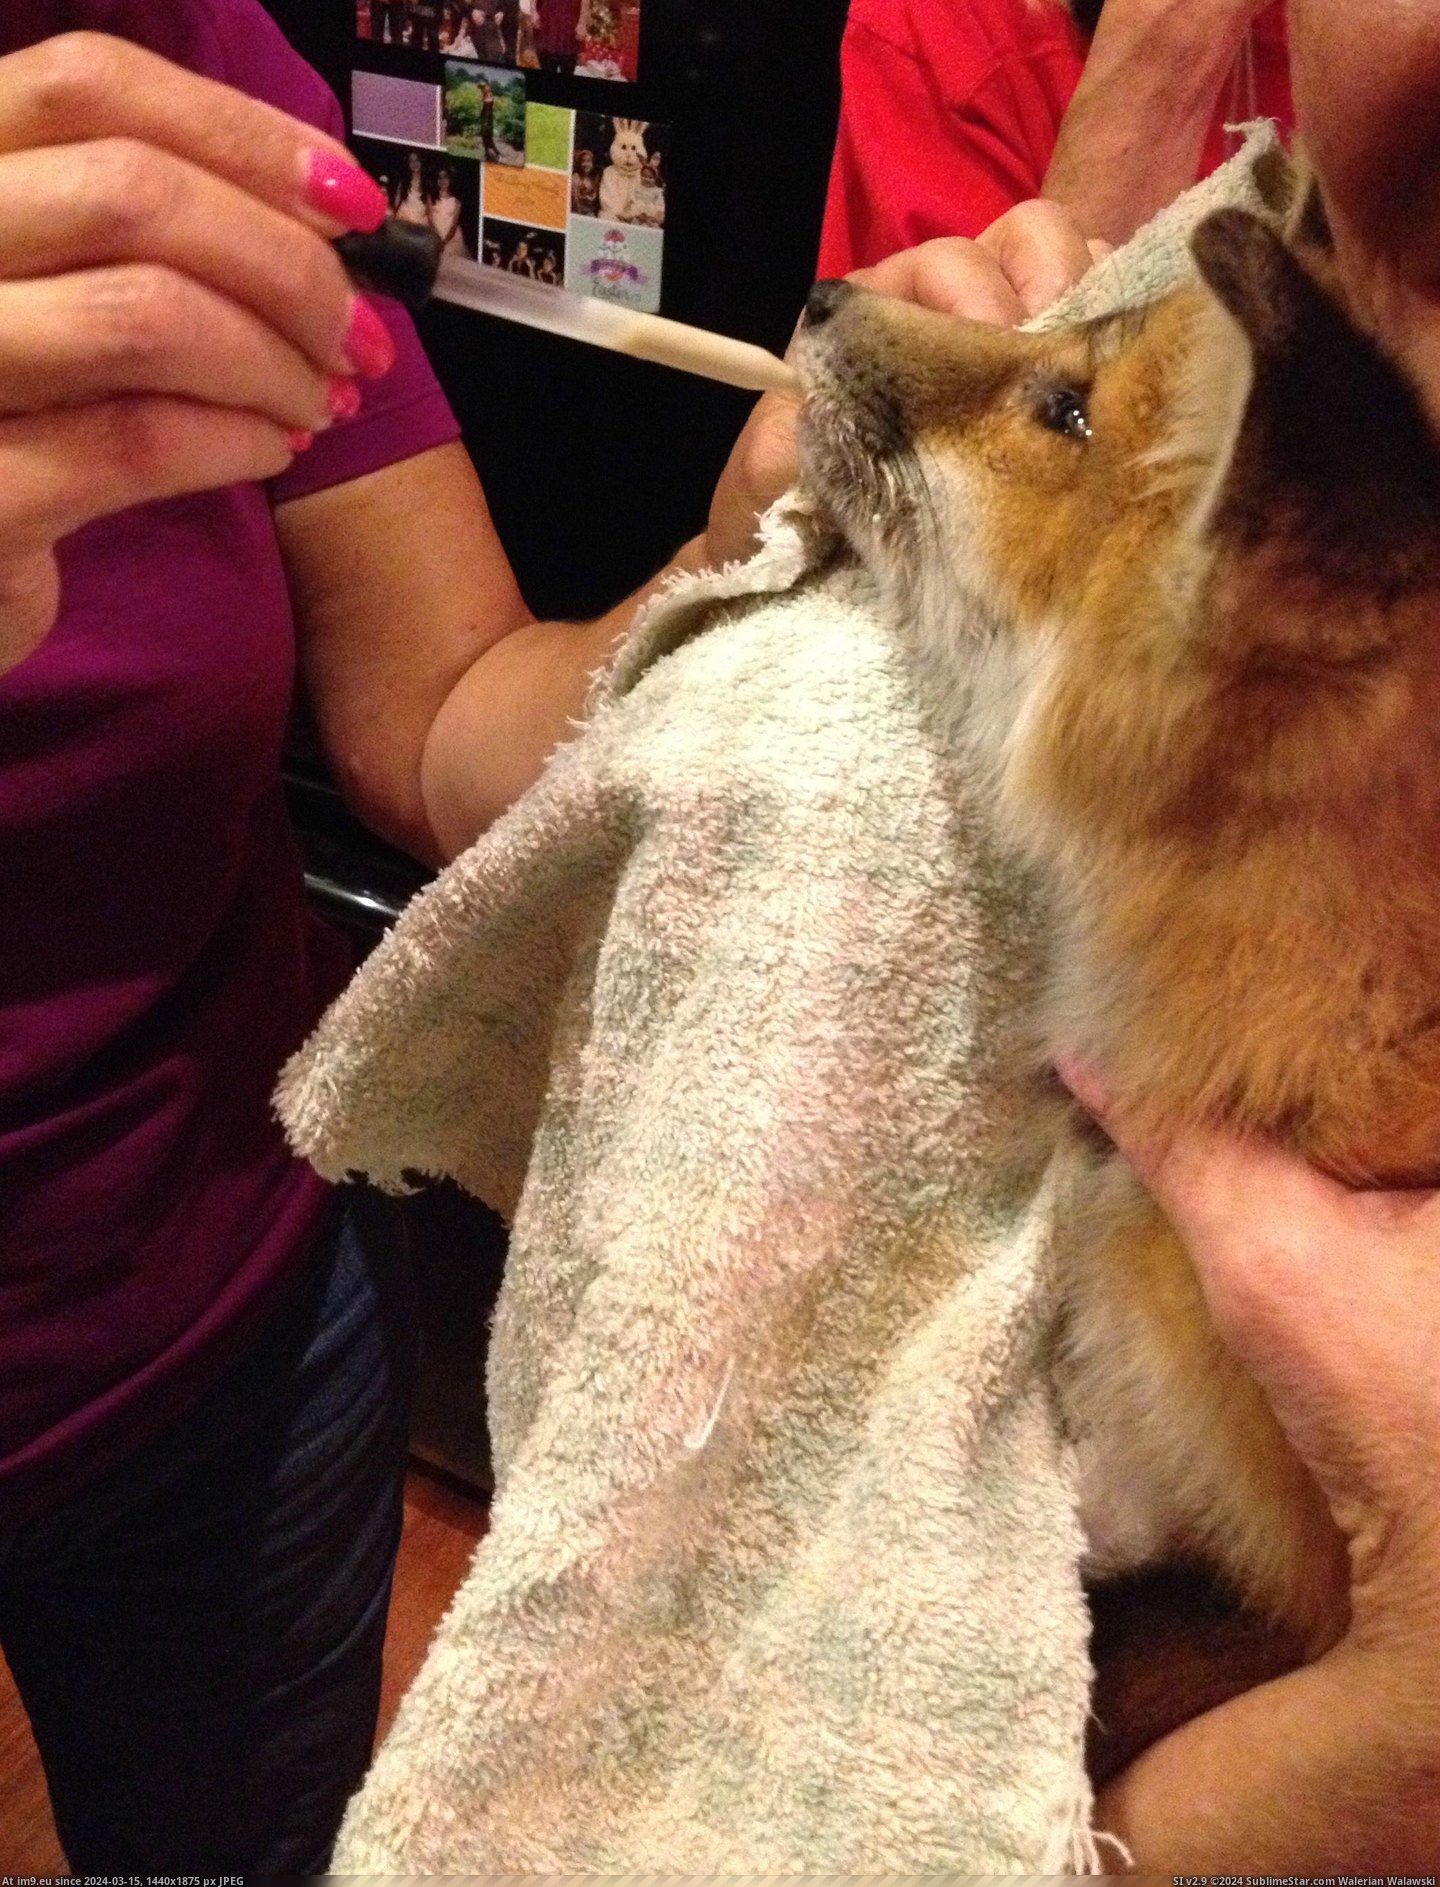 #Baby #Fox #Met [Aww] I met a baby fox yesterday! 1 Pic. (Изображение из альбом My r/AWW favs))